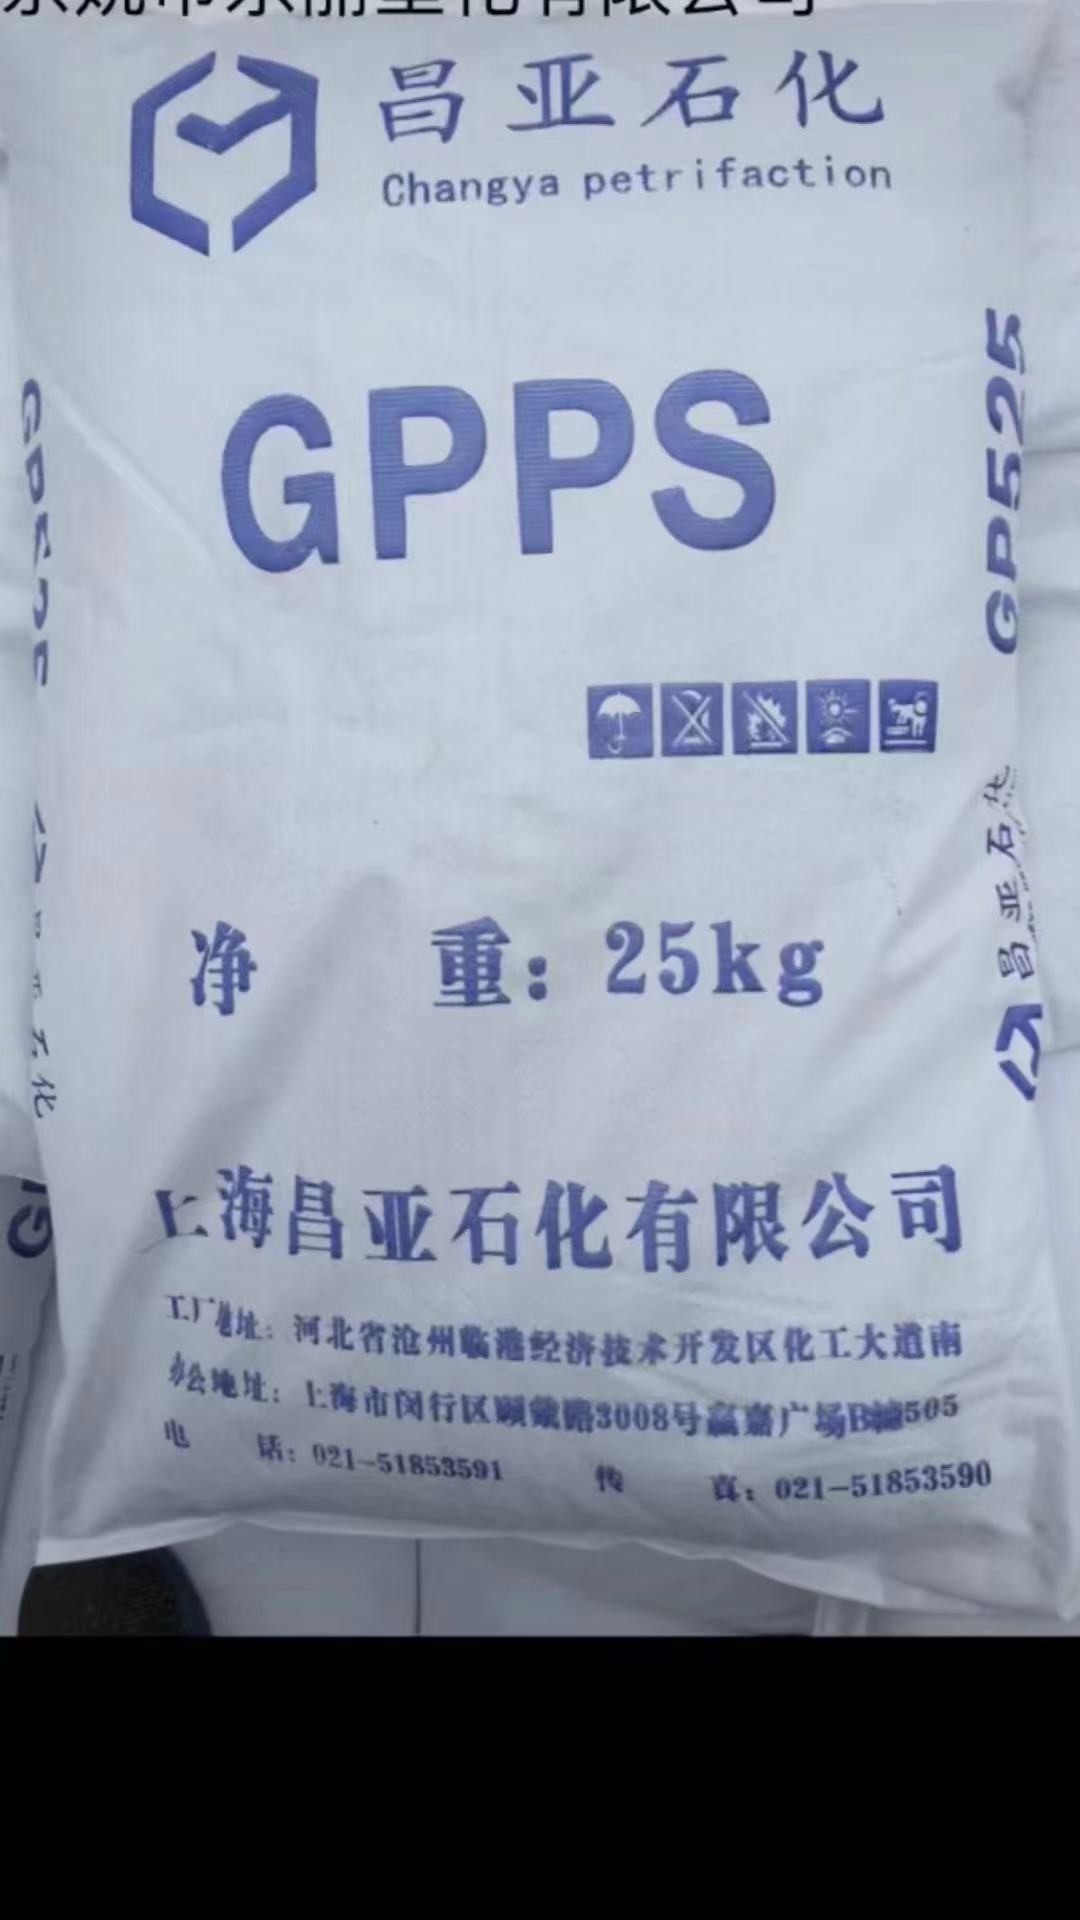 GPPS GP-525/昌亚石化